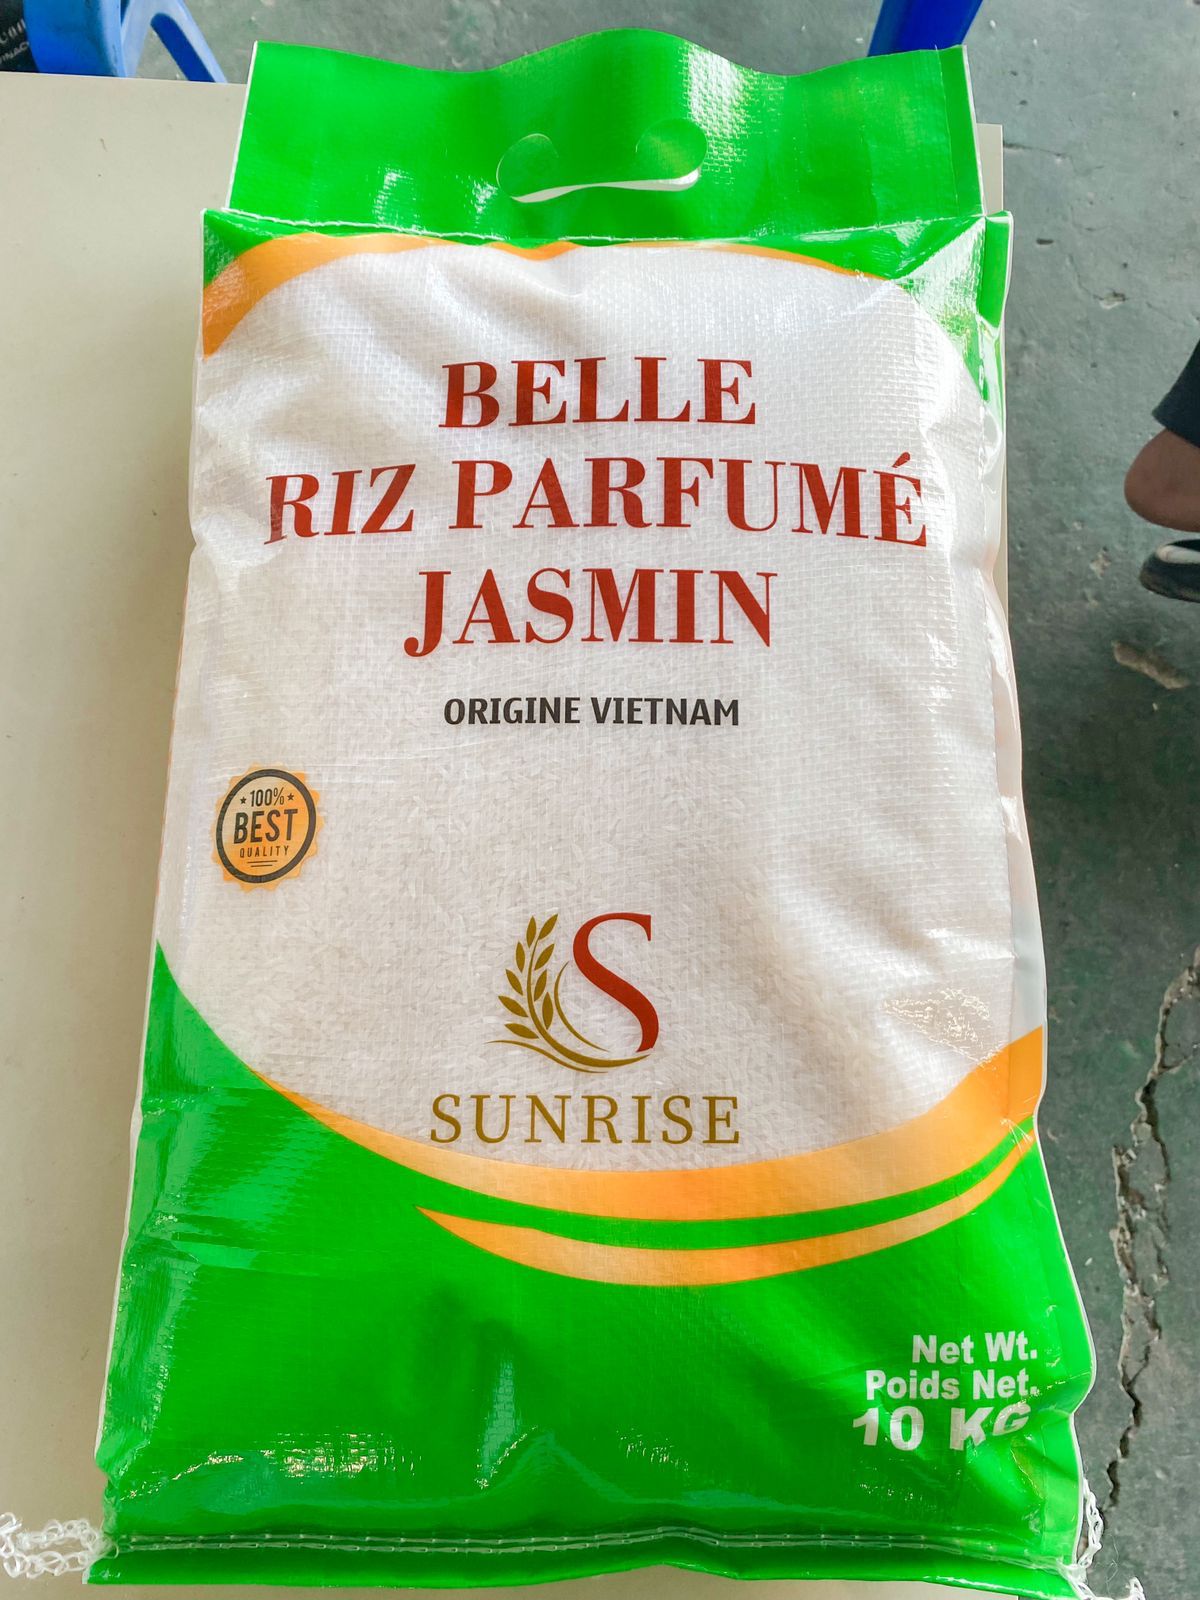 Jasmine rice from Vietnam 0084 909071104